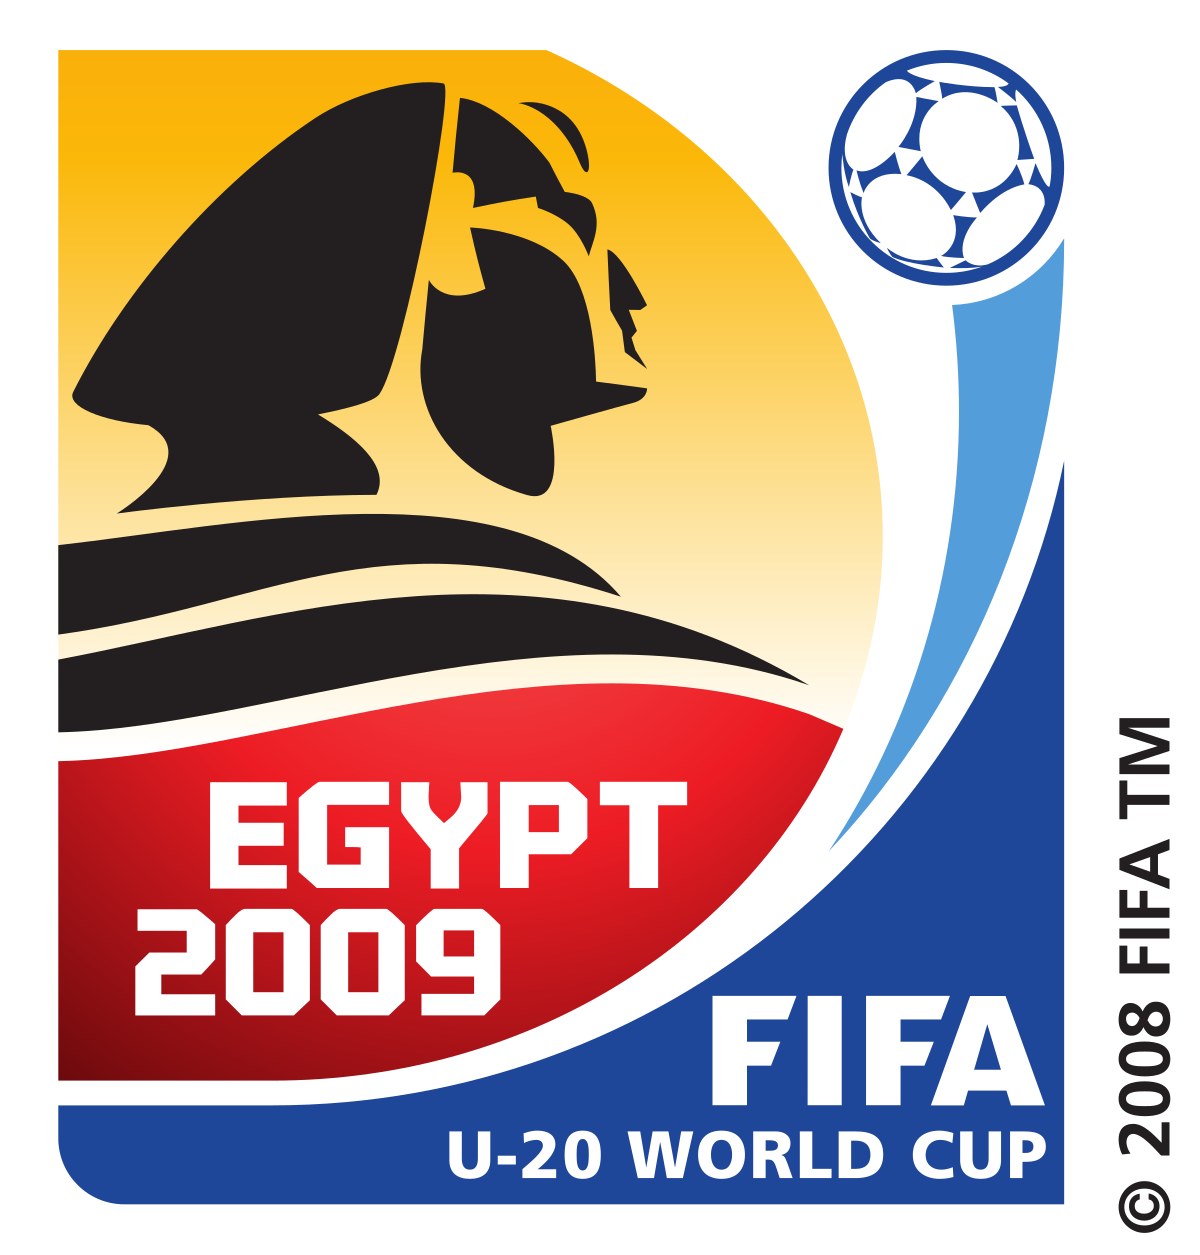 2009 FIFA U-20 World Cup - Wikipedia